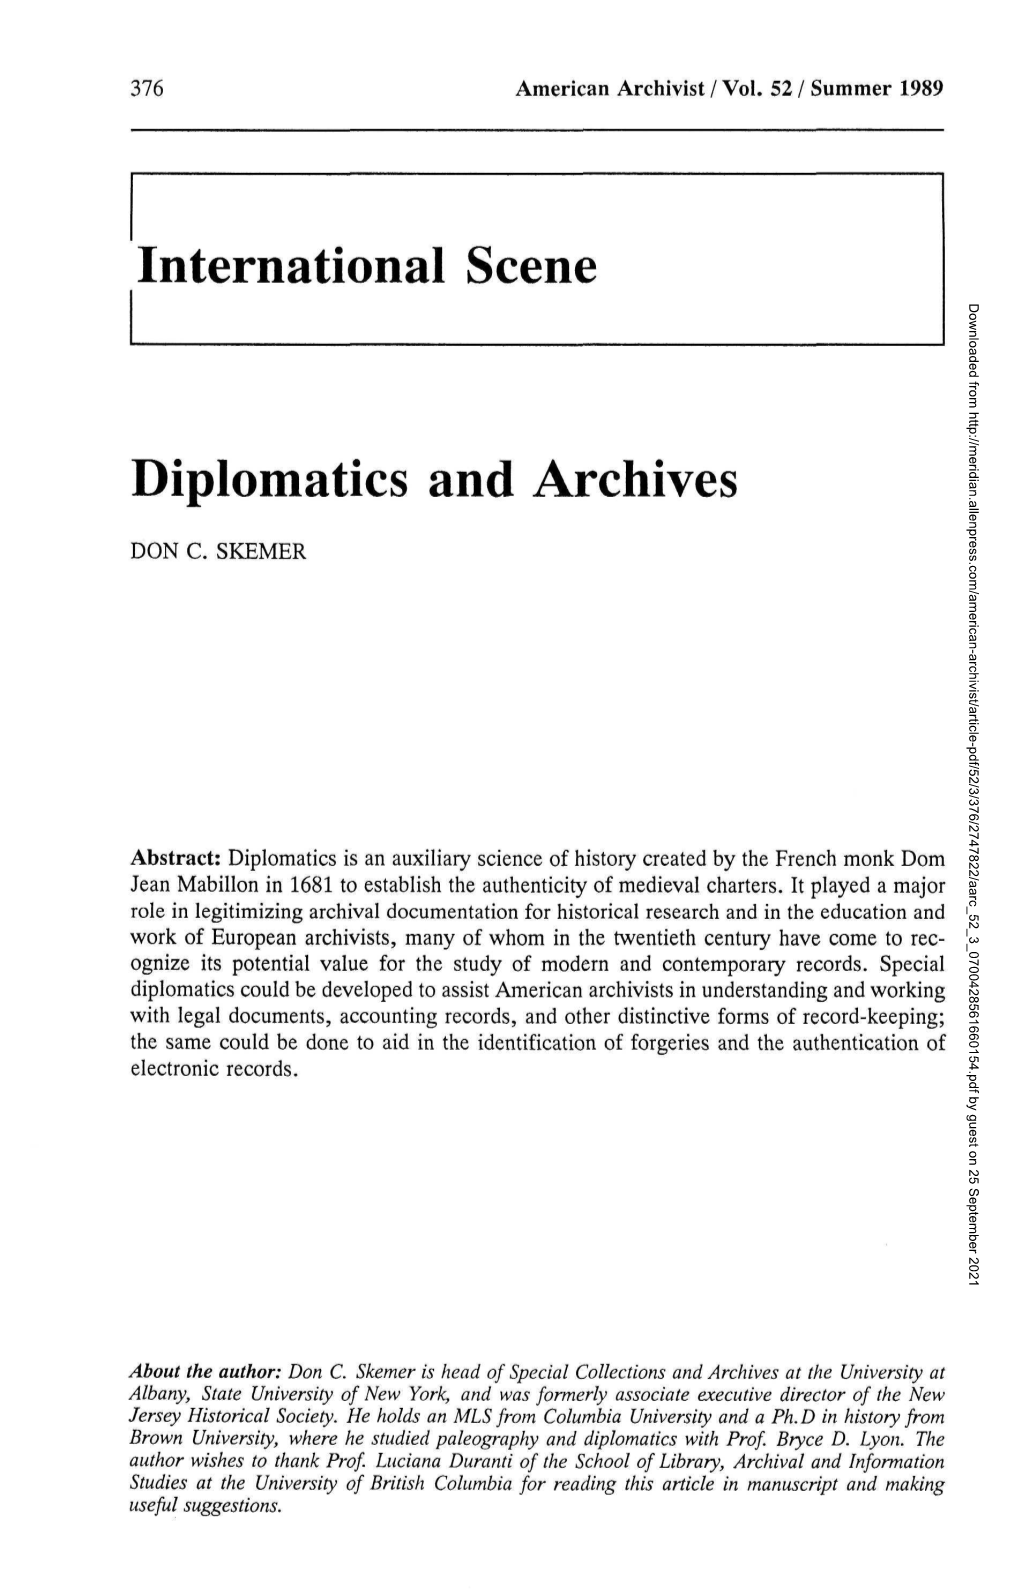 International Scene Diplomatics and Archives